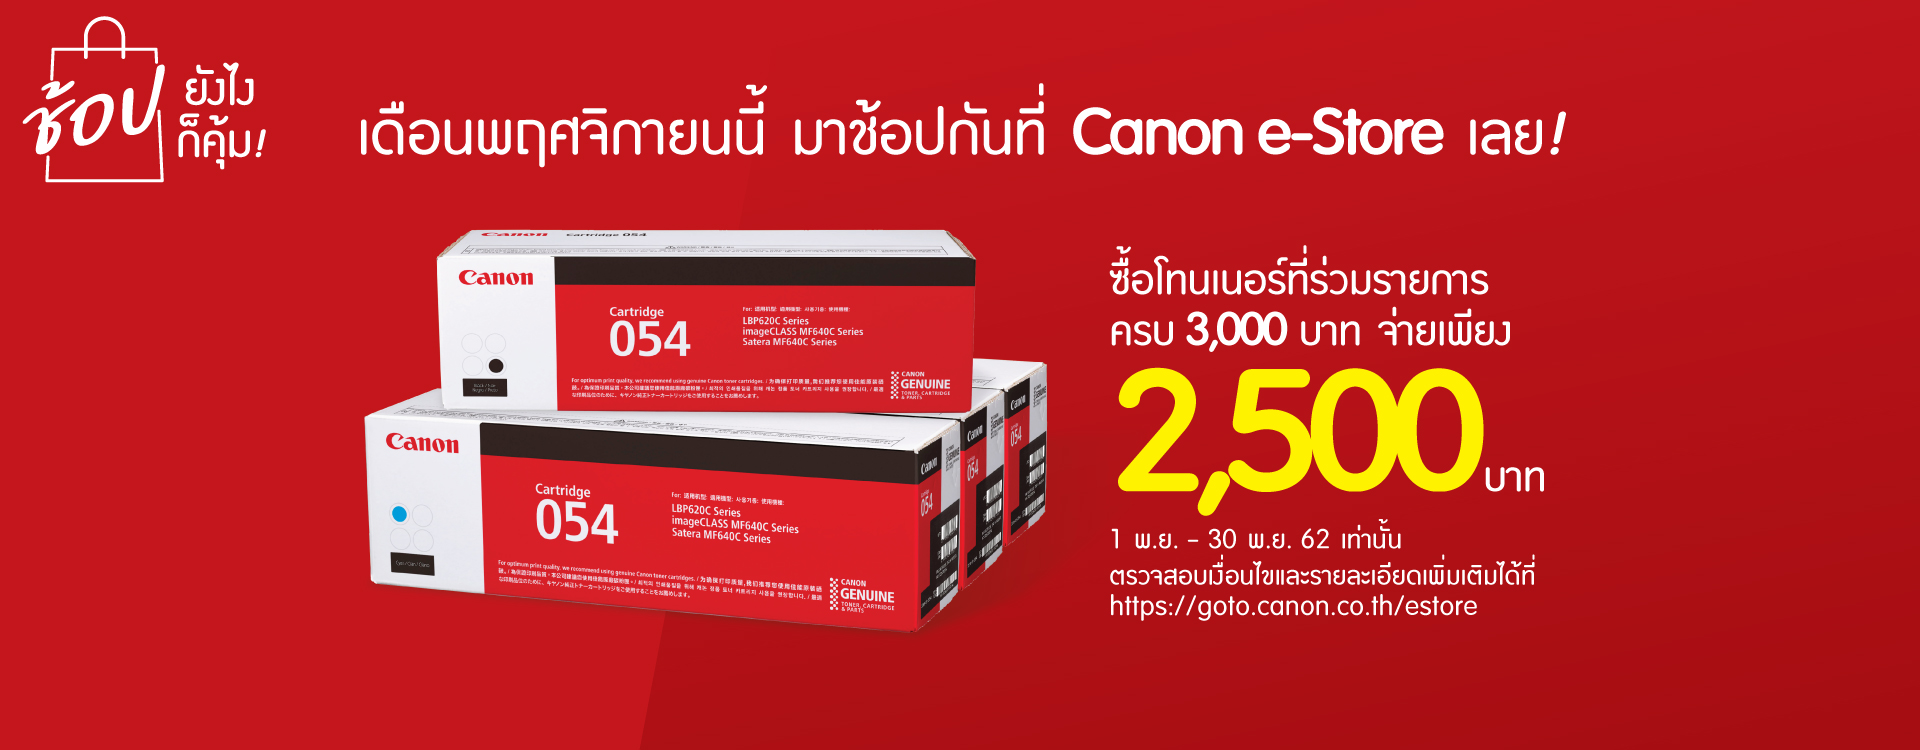 Home Canon Thailand - laser pointer roblox code